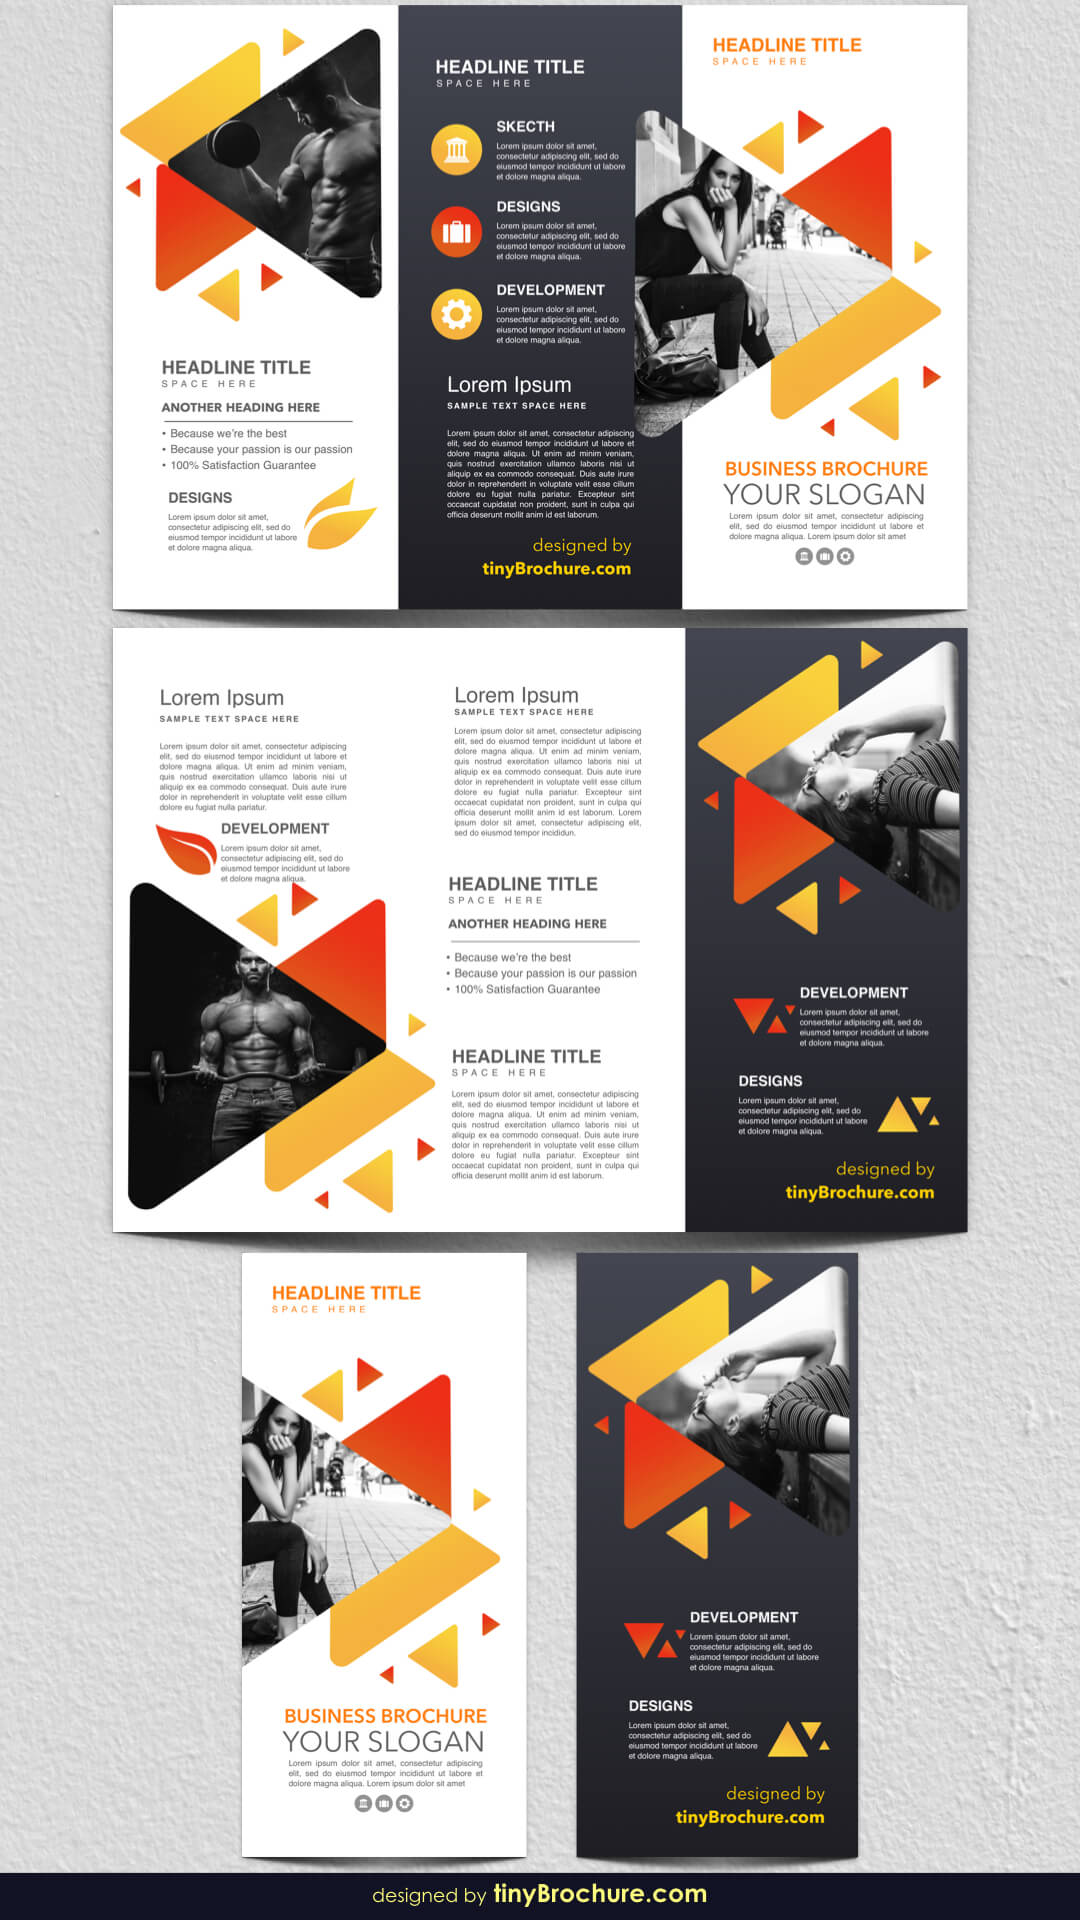 3 Panel Brochure Template Google Docs 2019 | Graphic Design Pertaining To Three Panel Brochure Template